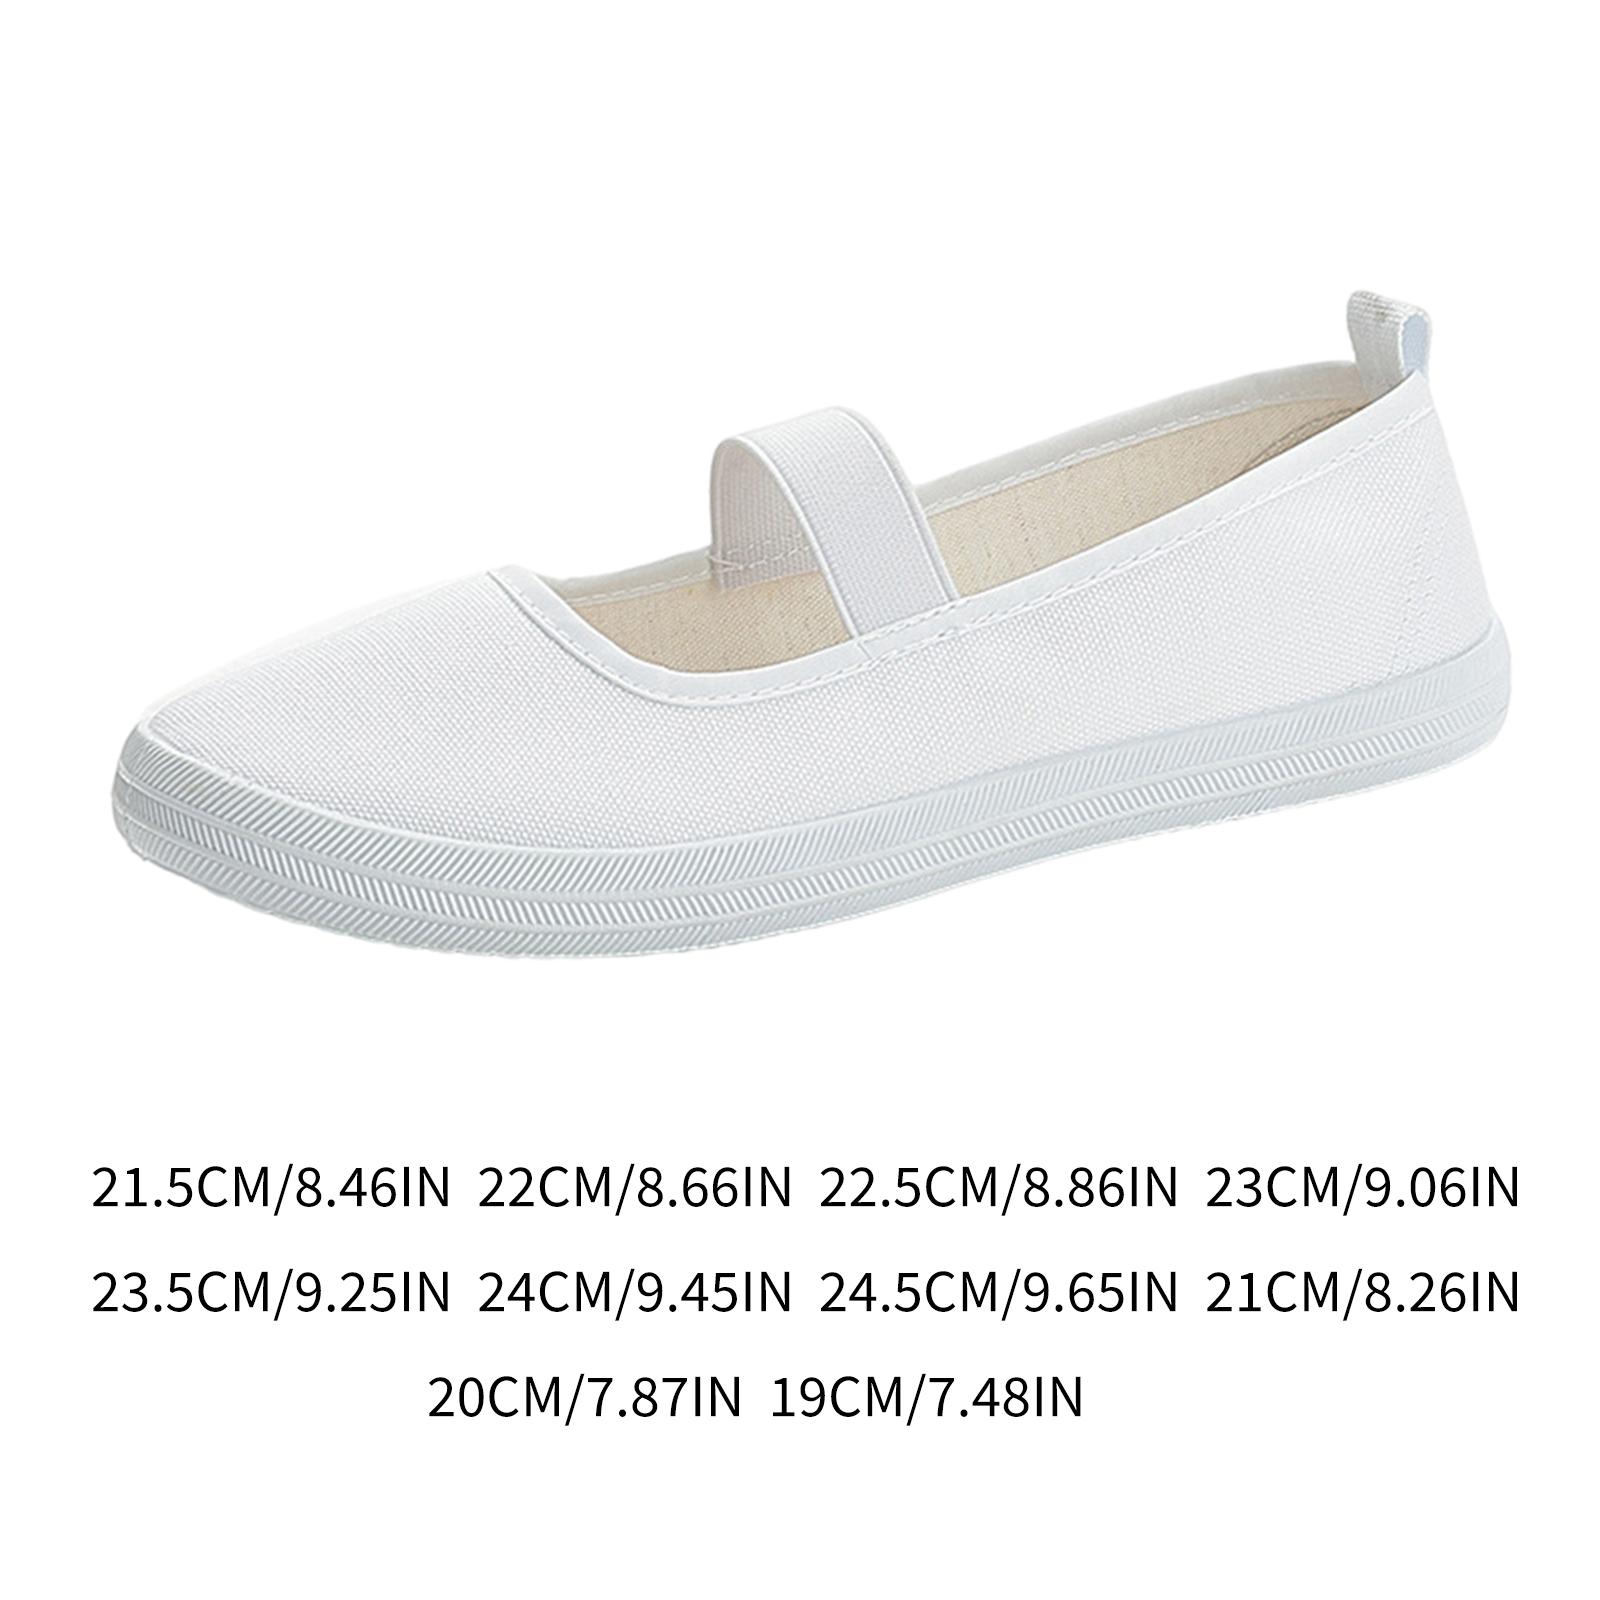 Women Nursing Shoes Nurse Workwear Slip Resistant Casual Slip On Flat Shoes 35